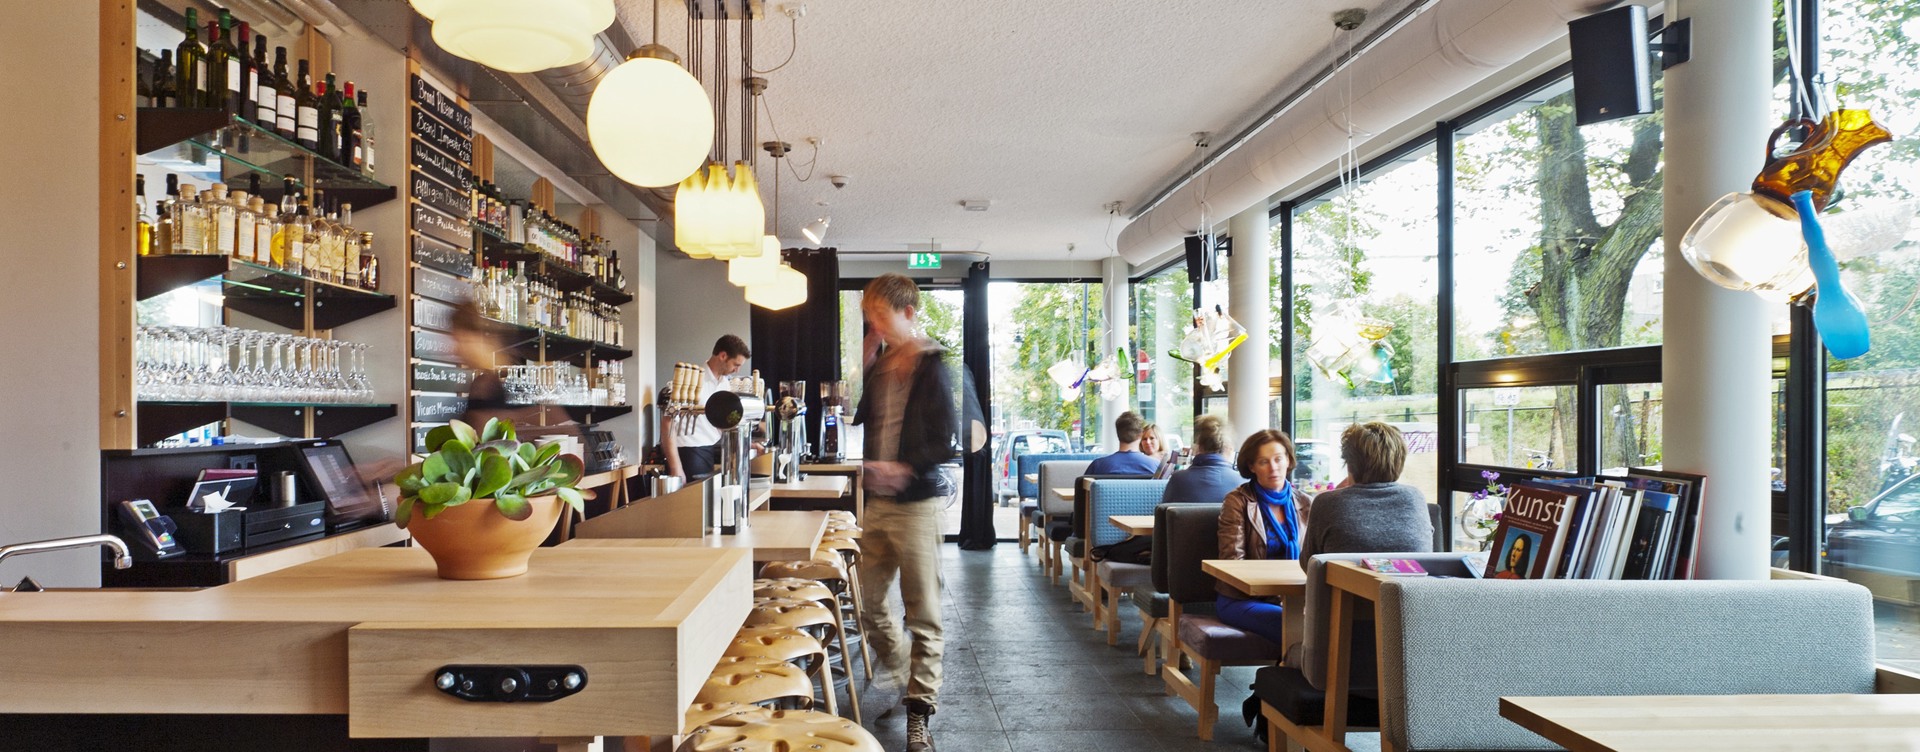 Café Caspar:
el moderno cuarto de estar de Arnhem